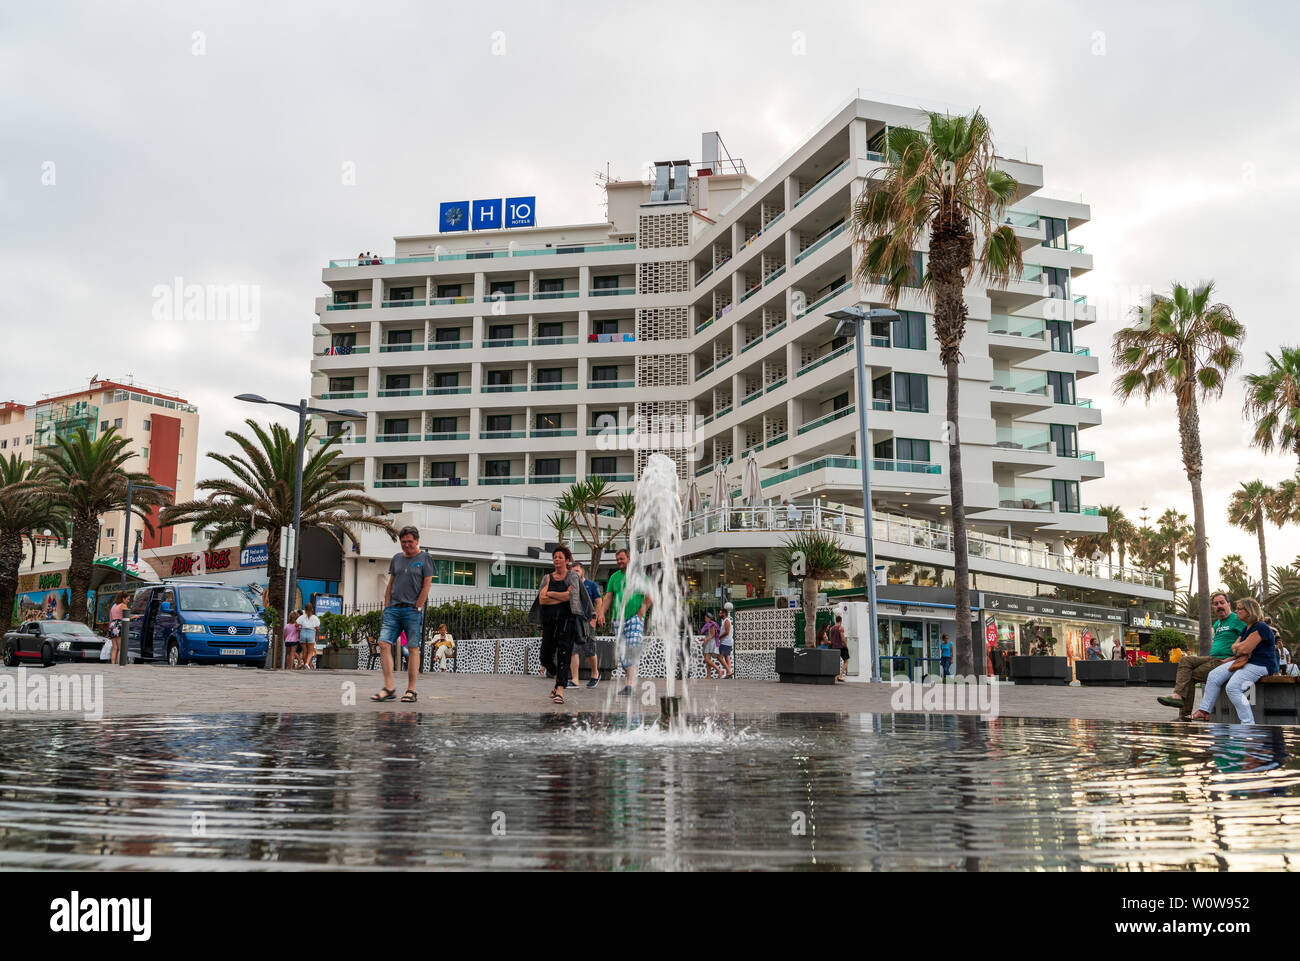 PUERTO DE LA CRUZ, CANARY ISLANDS, SPAIN - JULY 28, 2018: The hotel on the  waterfront - H10 Tenerife Playa Stock Photo - Alamy